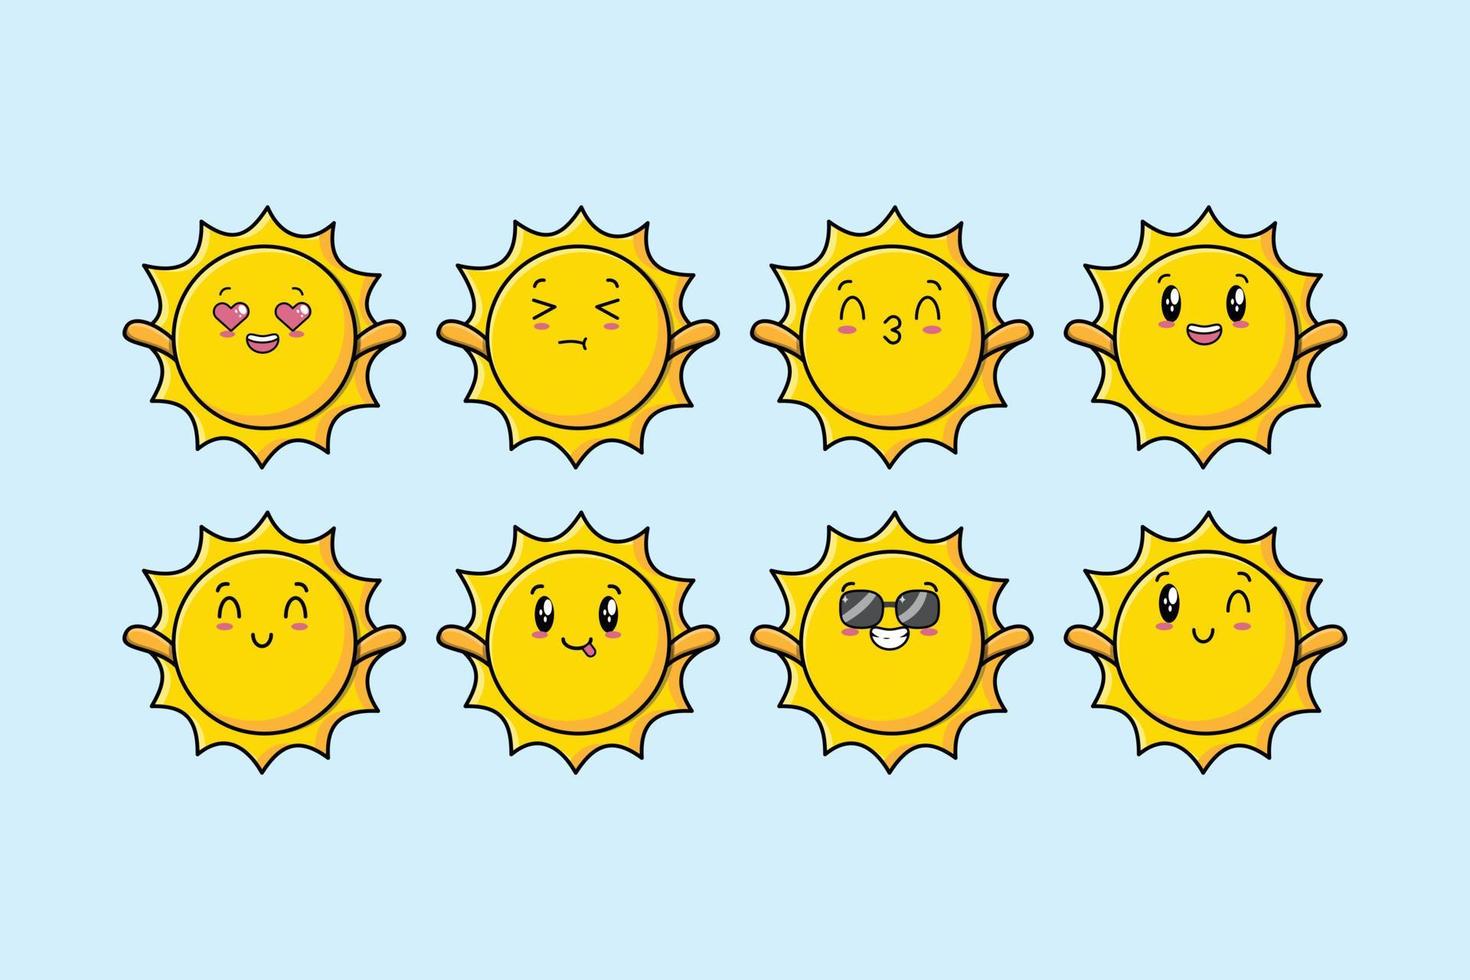 Set kawaii sun cartoon with different expressions vector